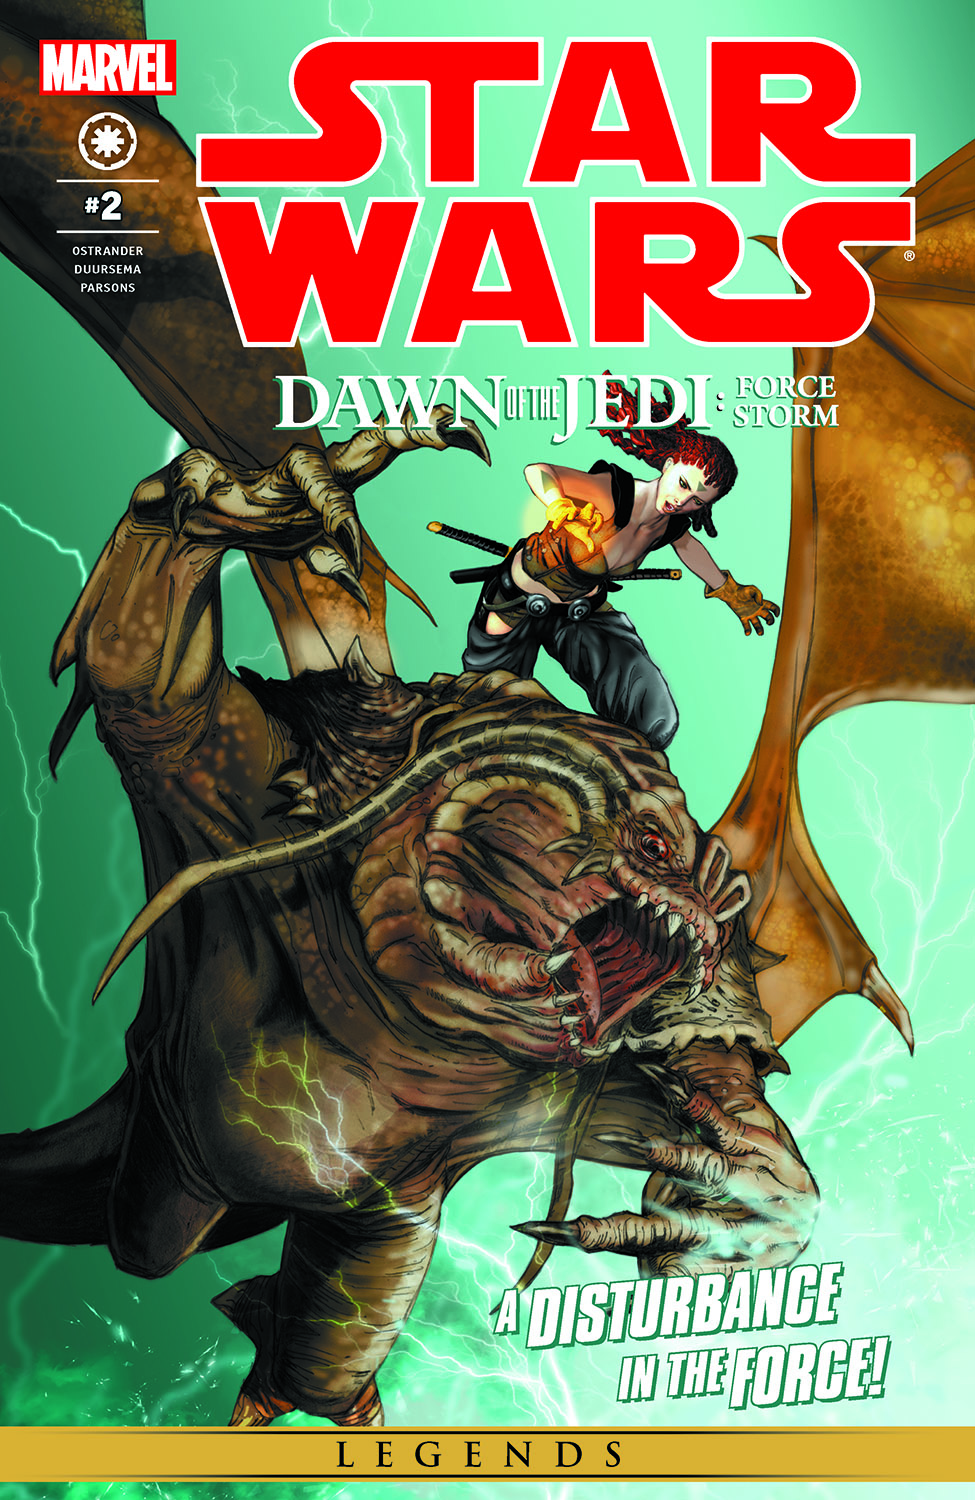 Star Wars: Dawn of the Jedi - Force Storm (2012) #2